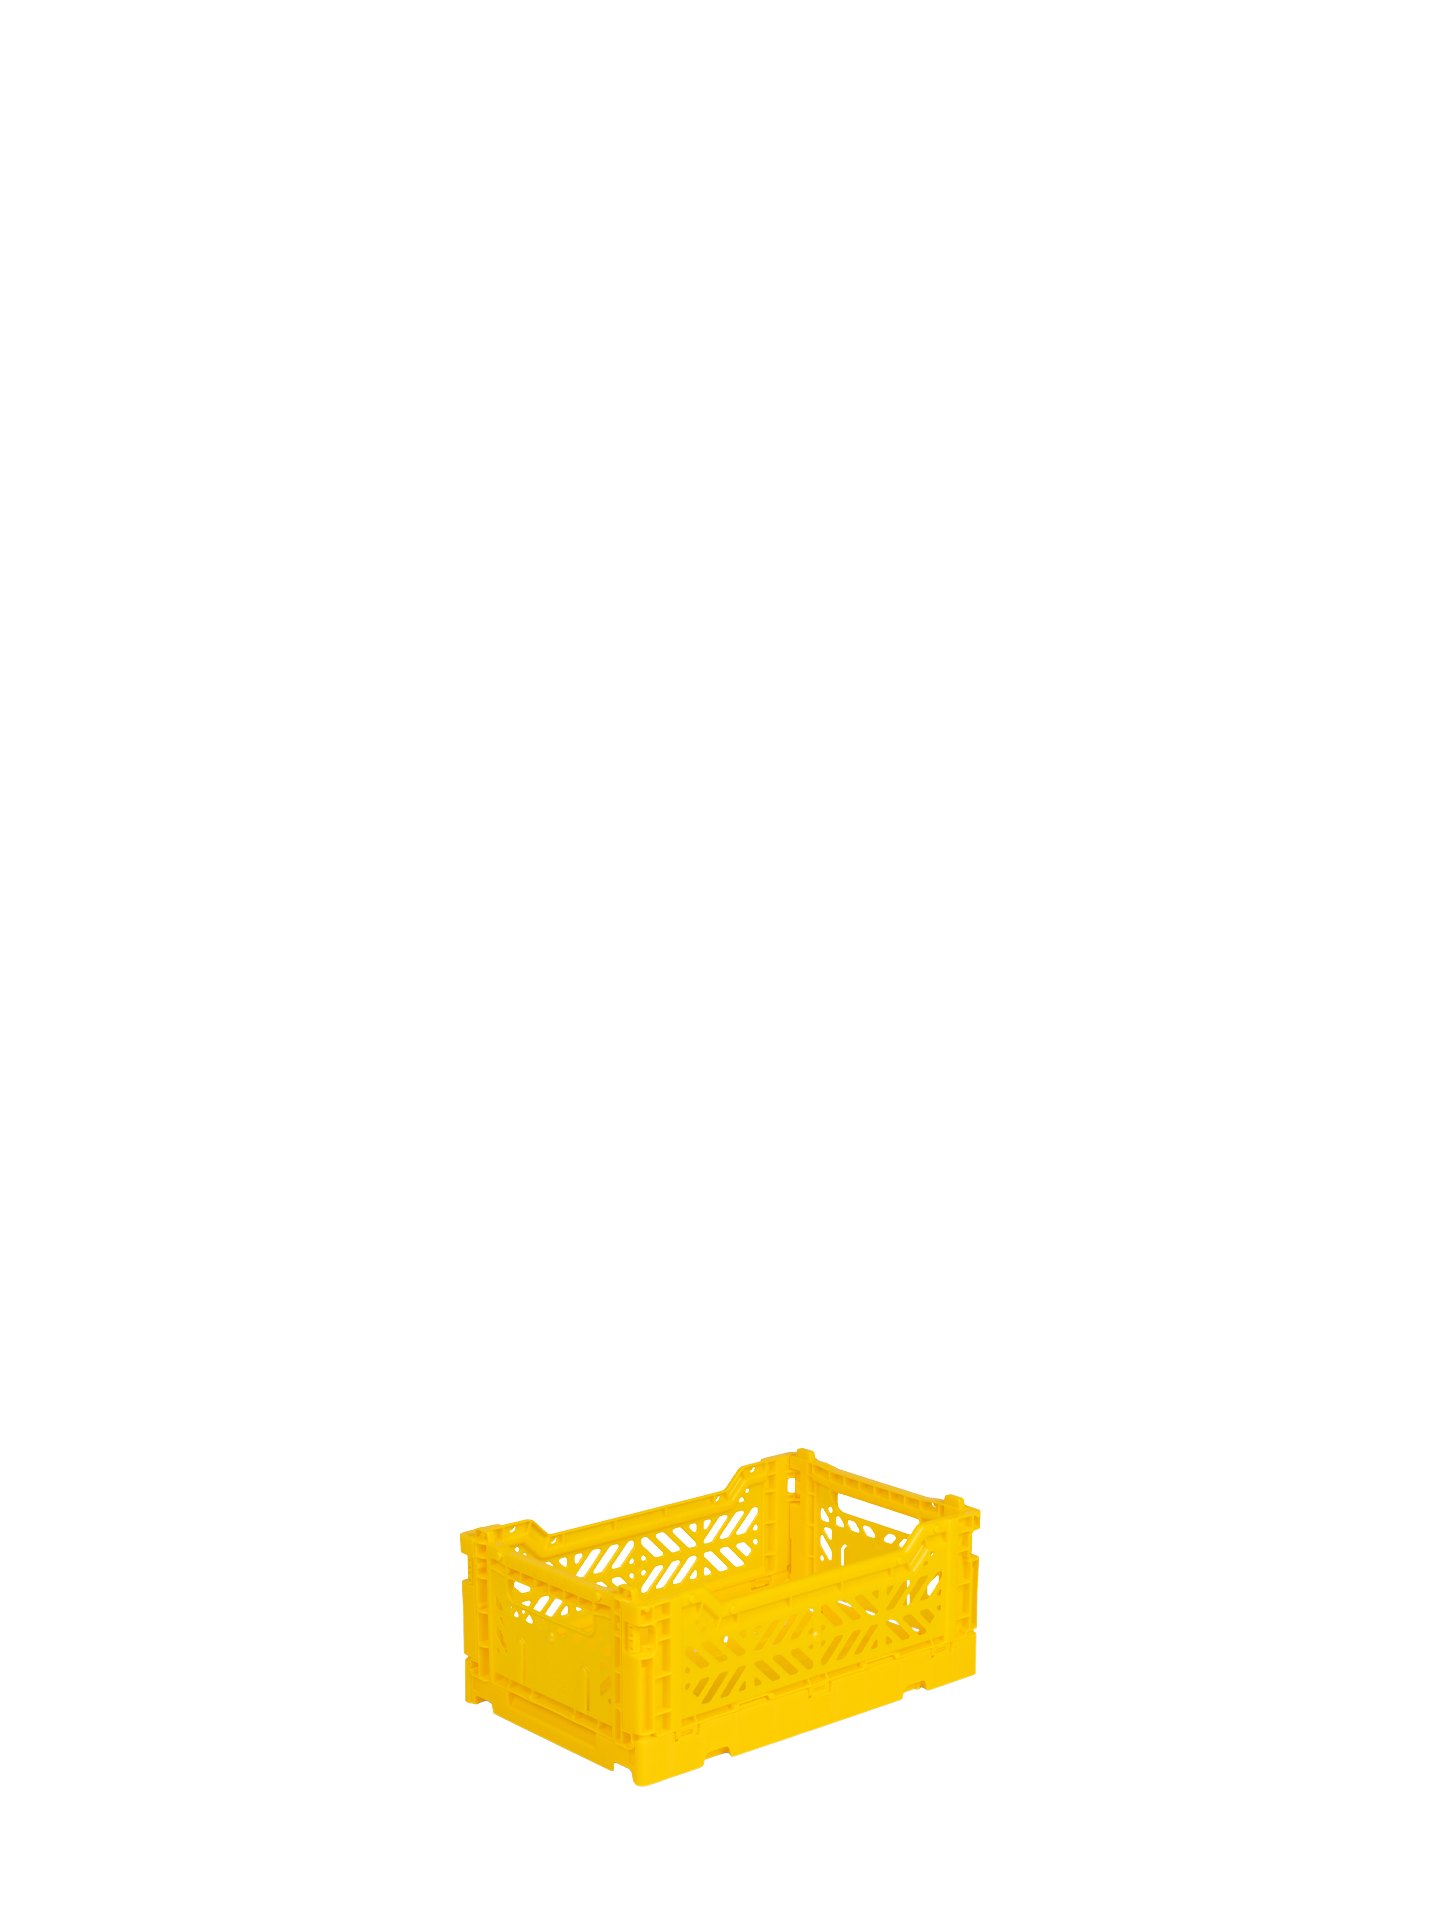 Mini Aykasa crate in sunny yellow stacks and folds